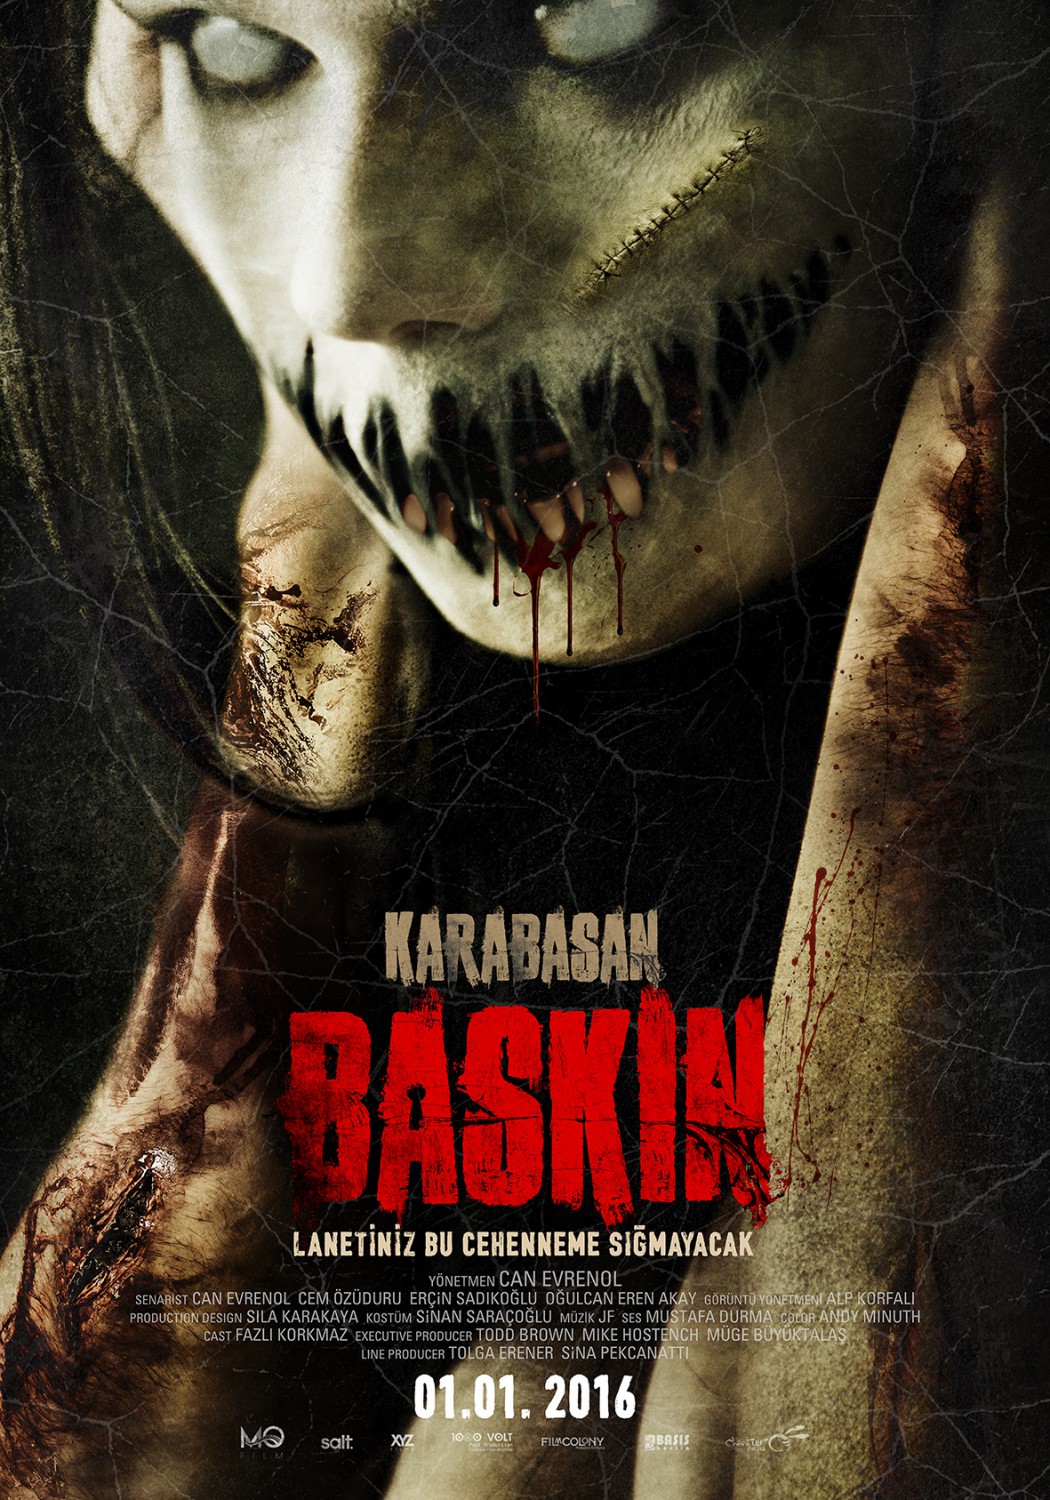 Extra Large Movie Poster Image for Baskın: Karabasan (#2 of 2)